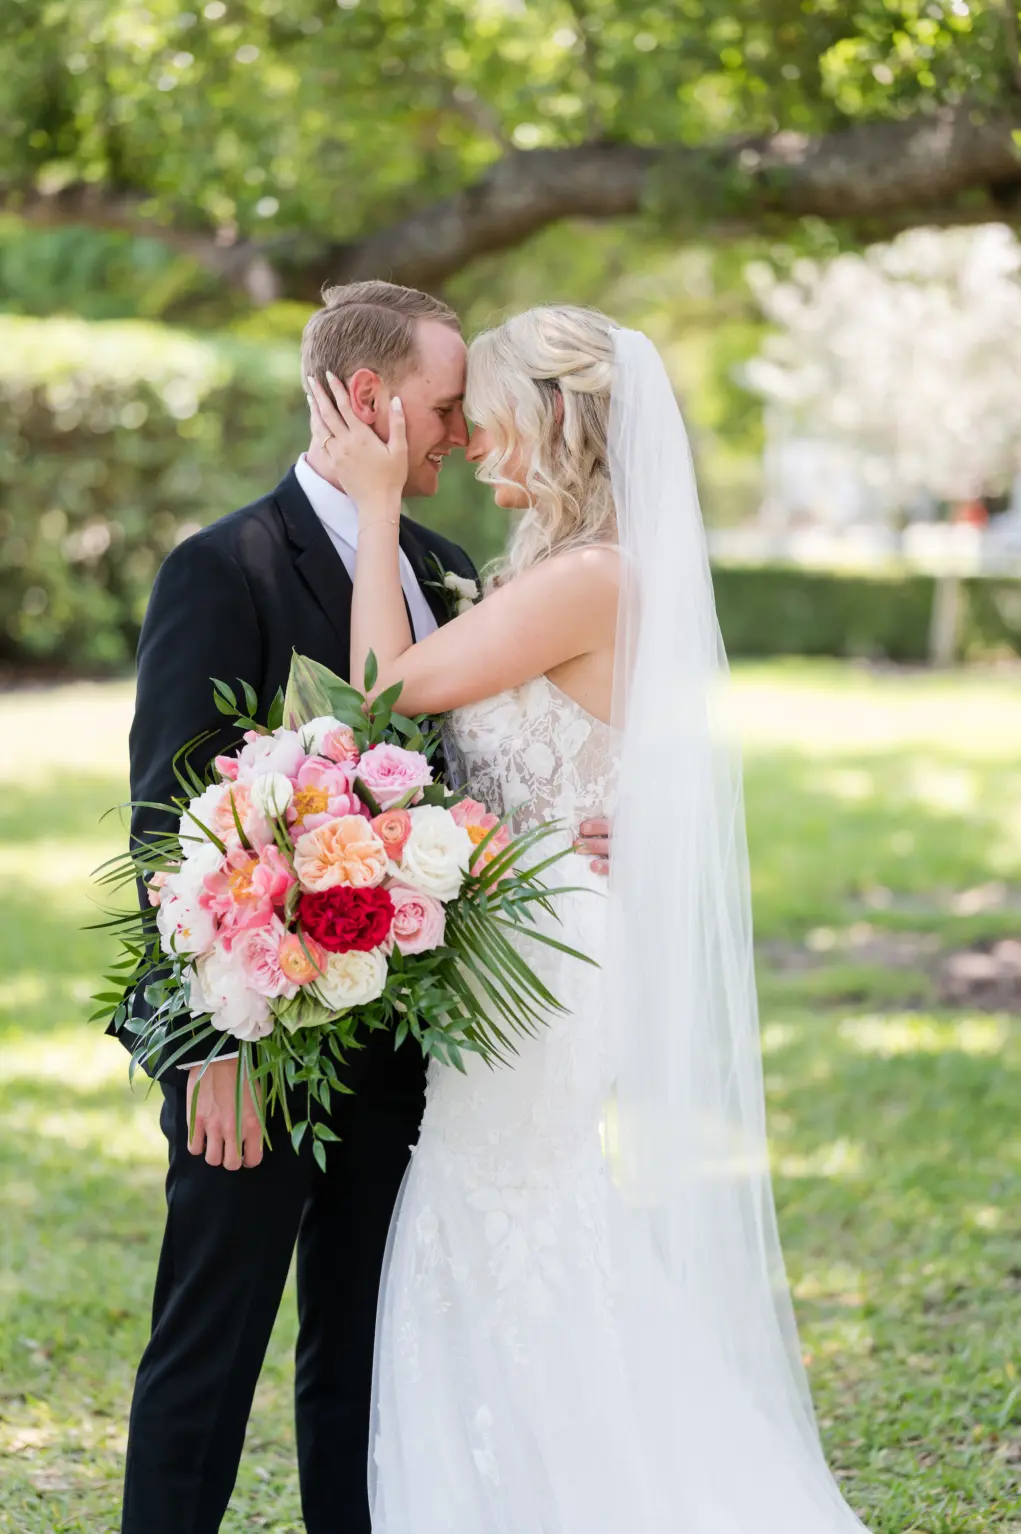 Intimate Bride and Groom Wedding Portrait | Tampa Planner EventFull Weddings | Photographer Amanda Zabrocki Photography